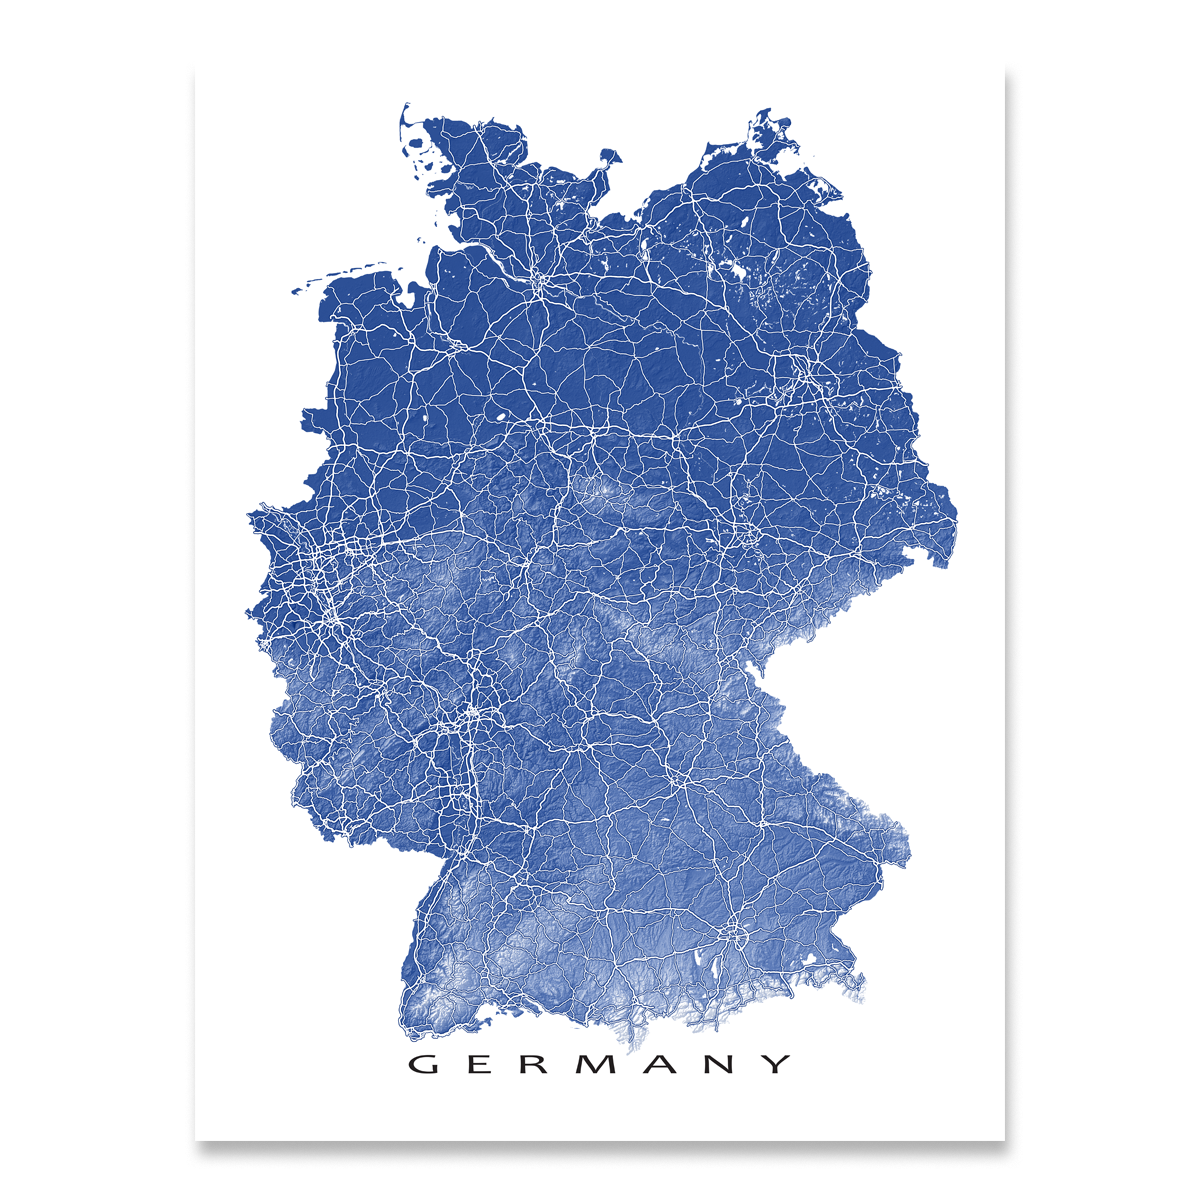 Print germany. Плакат Deutschland. Germany Map 3d. Germany poster Map.